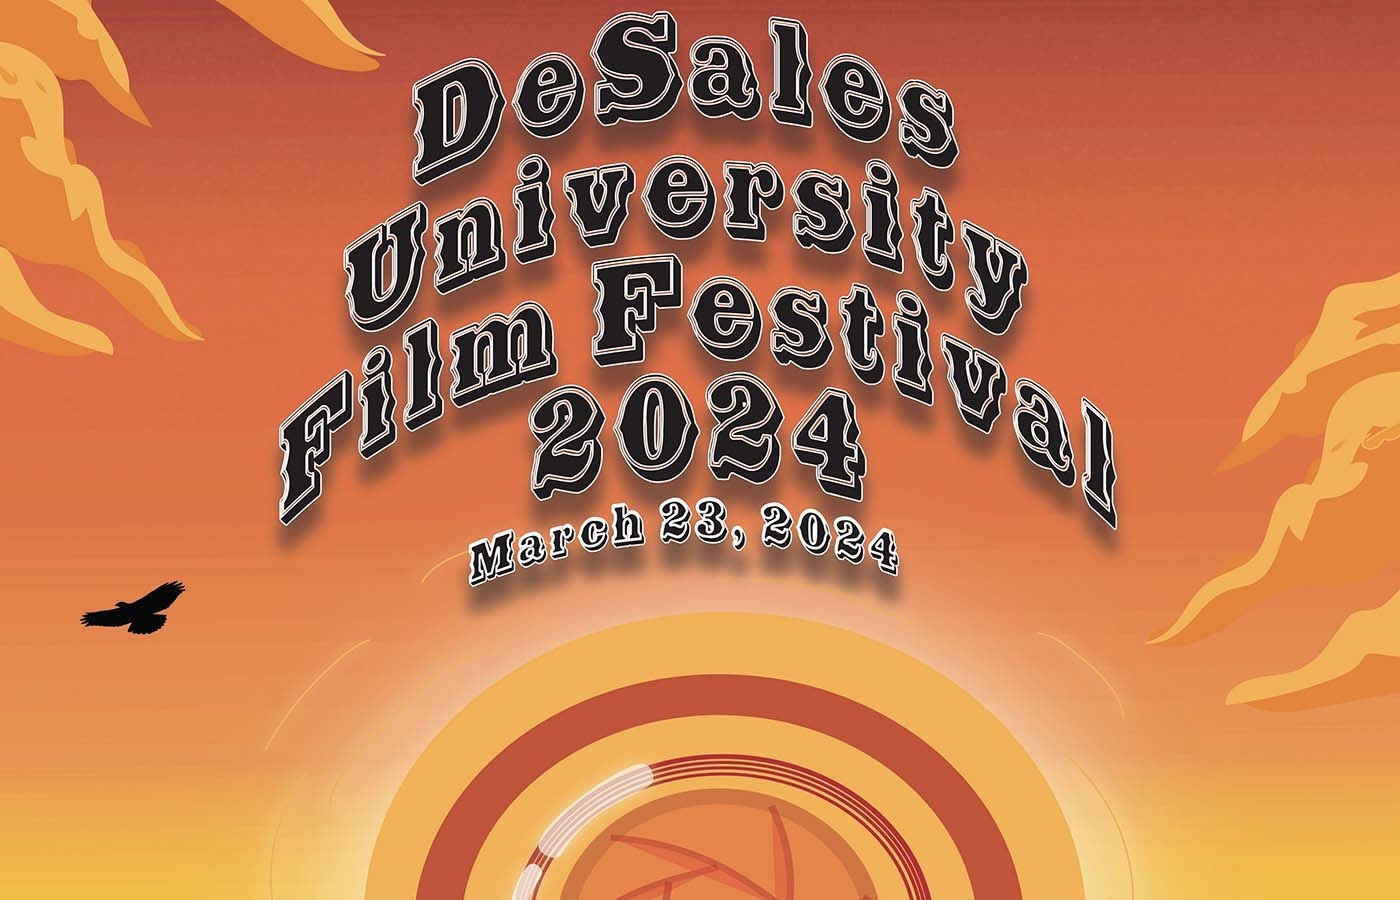 DeSales University Film Festival poster